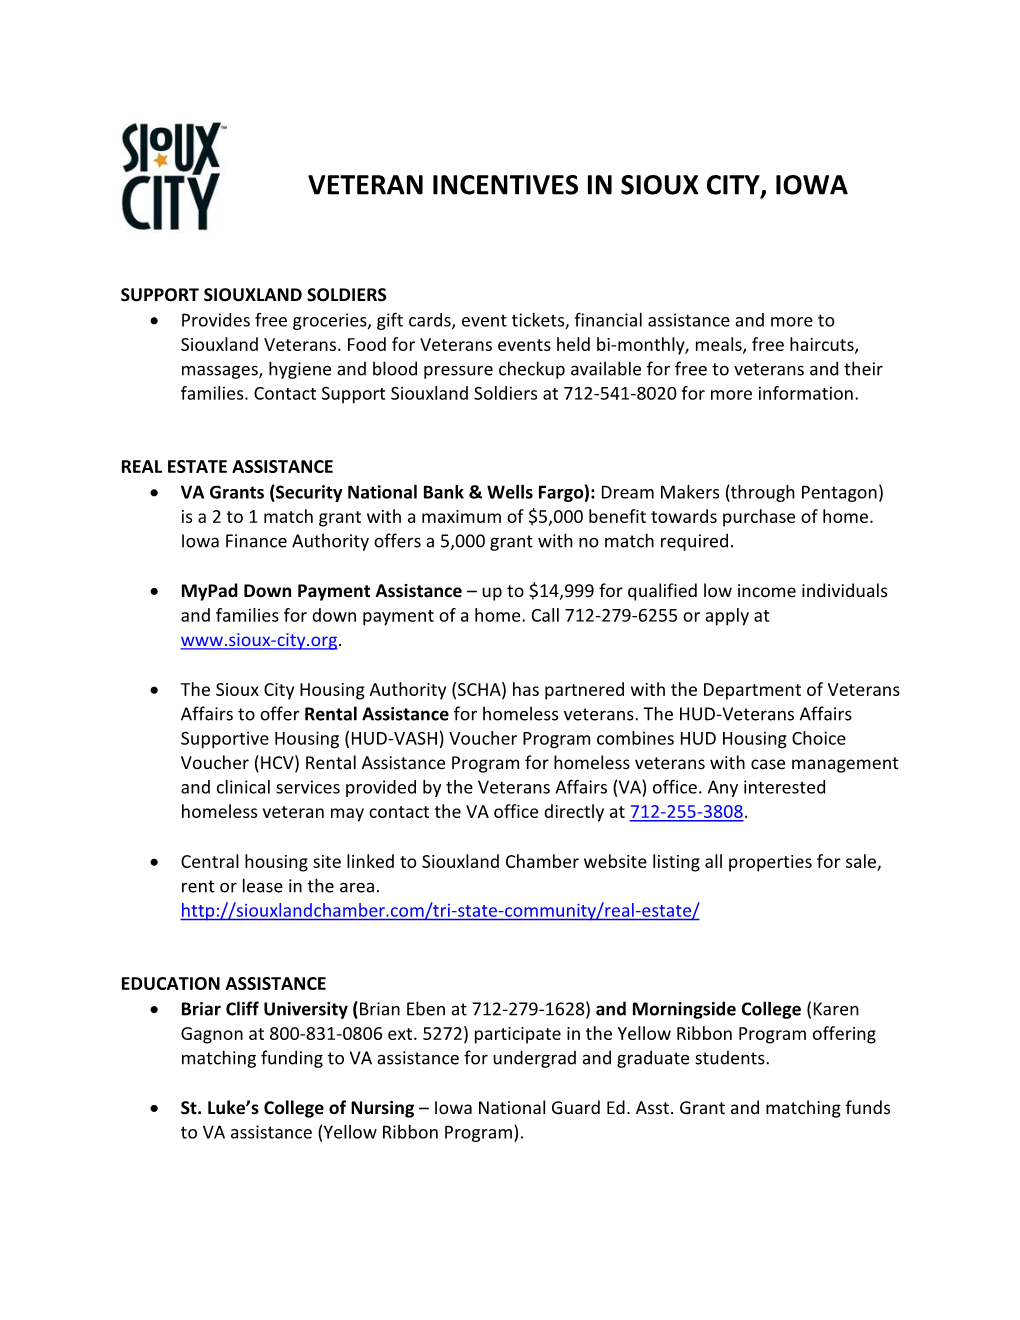 Veteran Incentives in Sioux City, Iowa